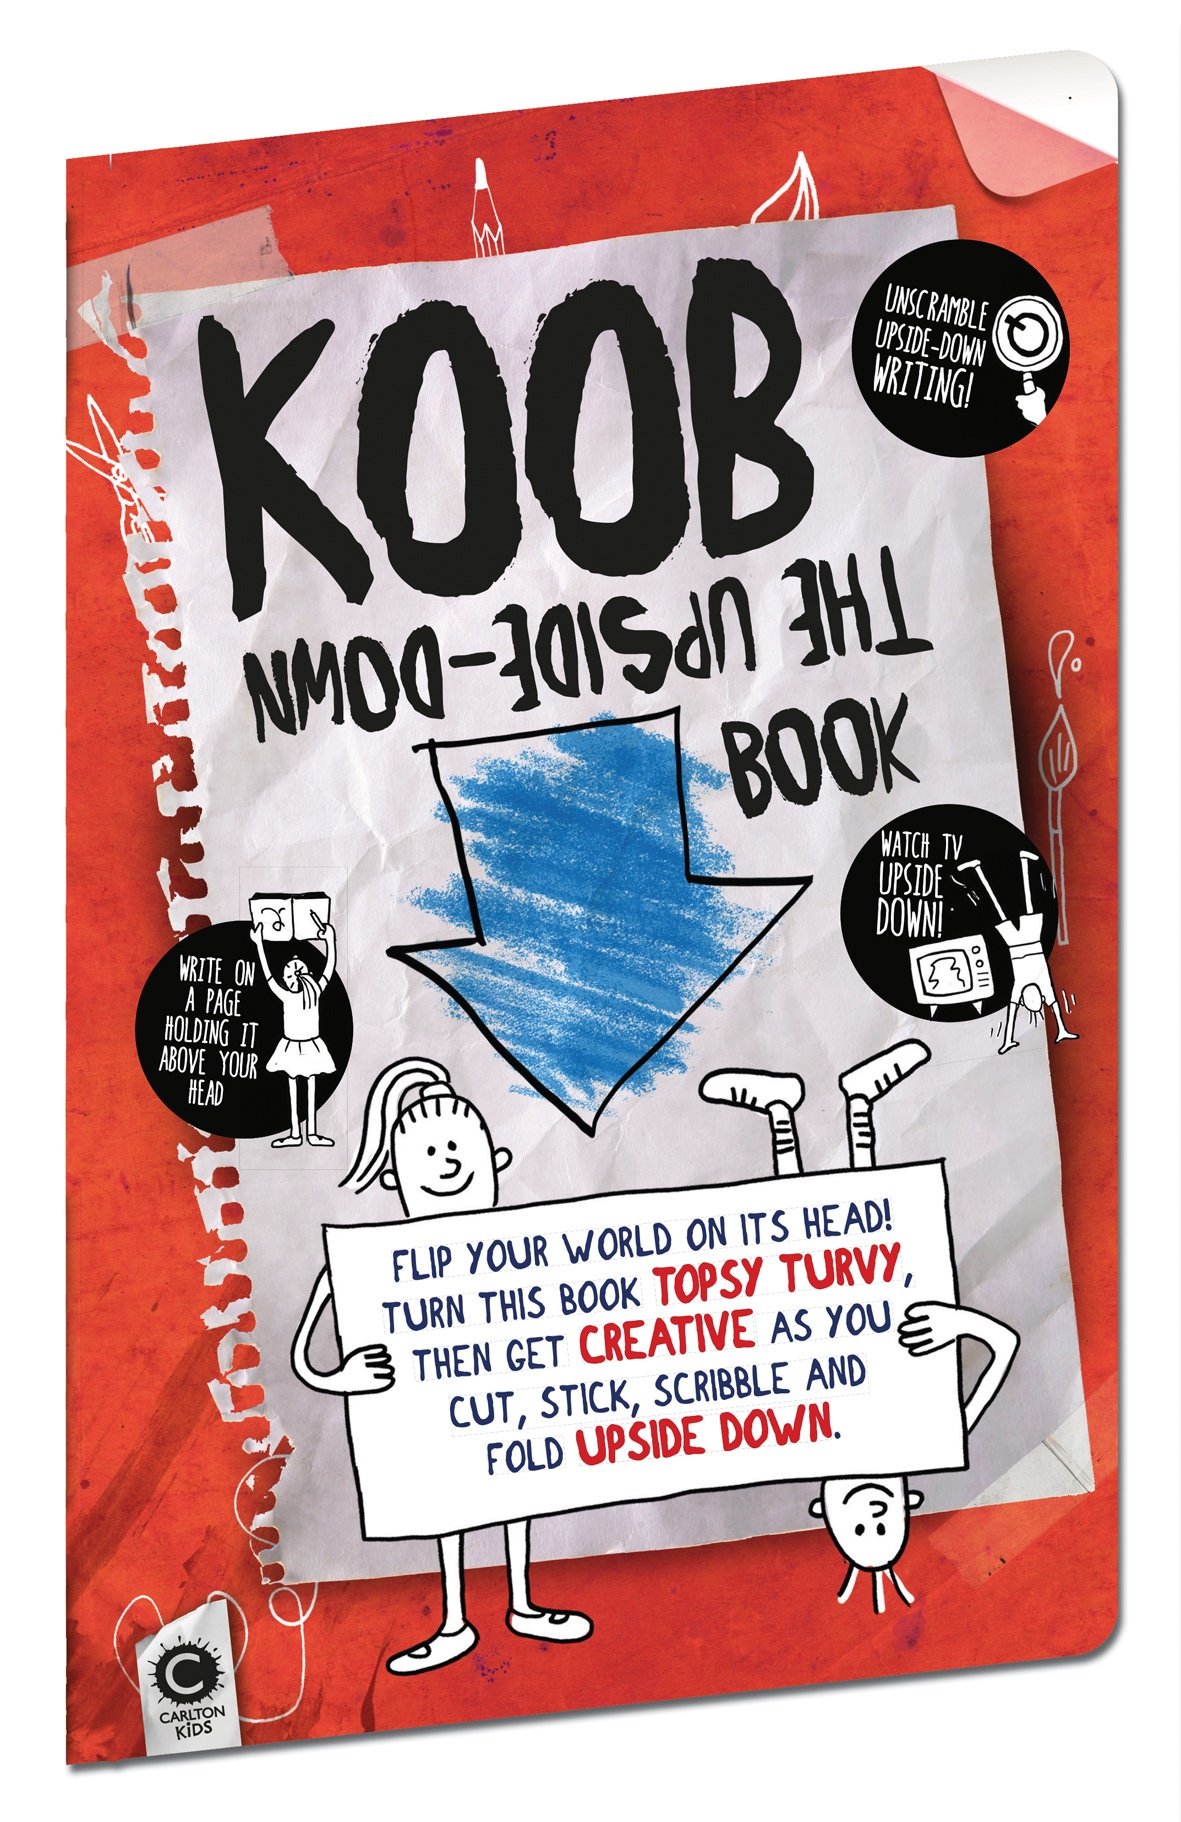 KOOB The Upside-Down Book